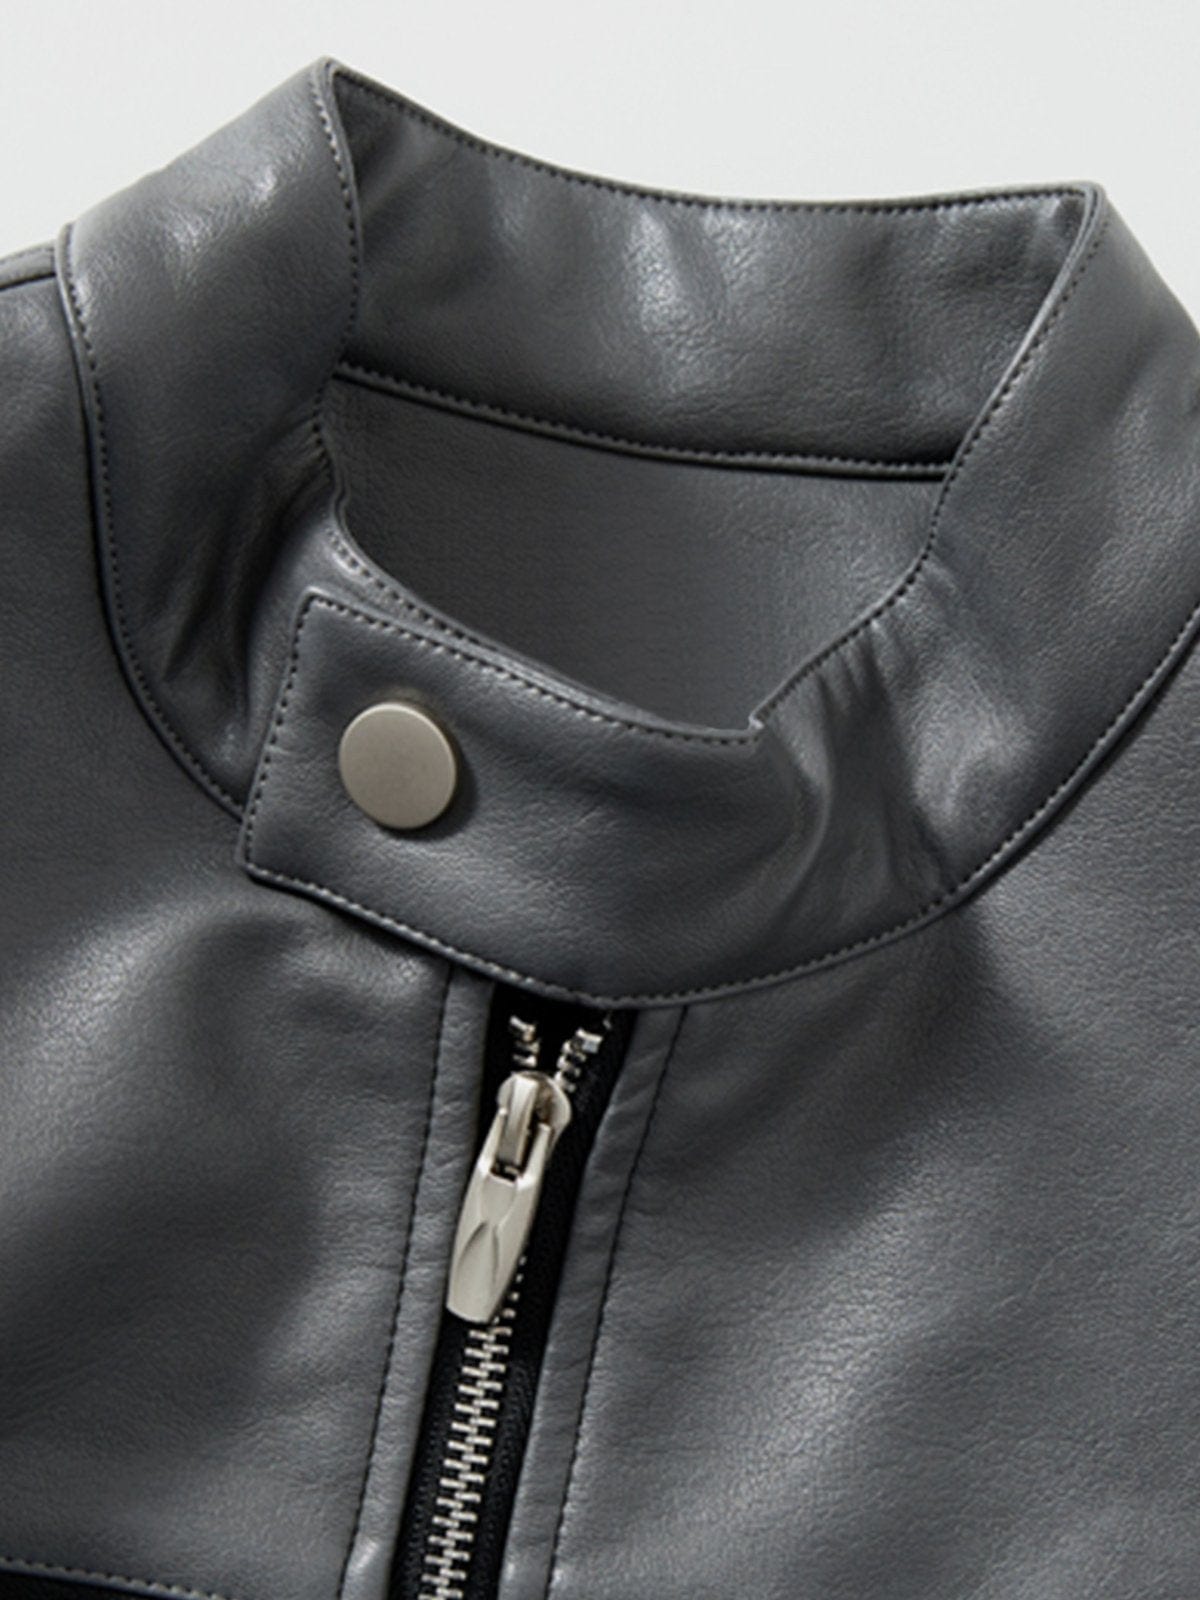 NEV Futuristic Reflective Material Splicing Jacket